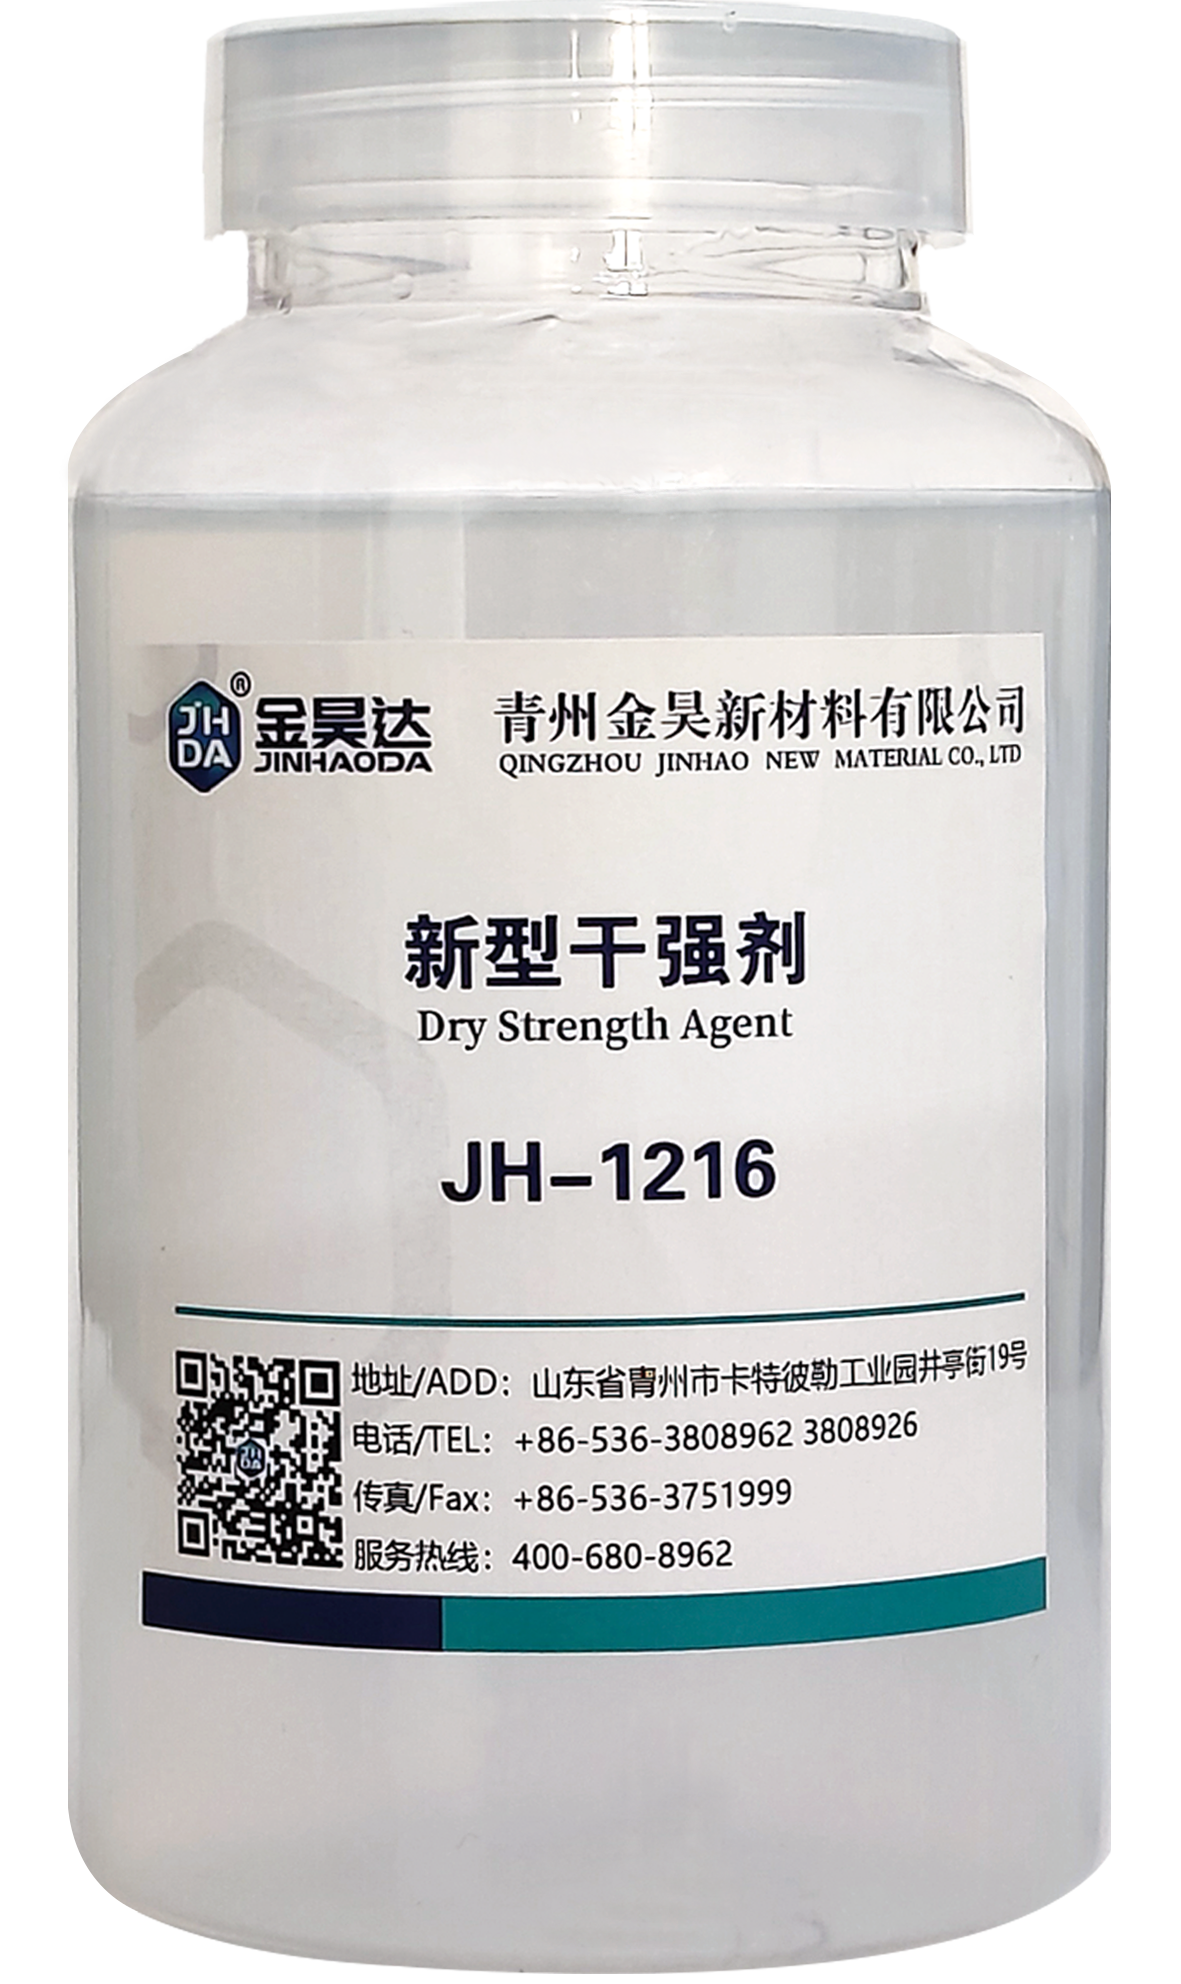 JH-1216 new dry strength agent